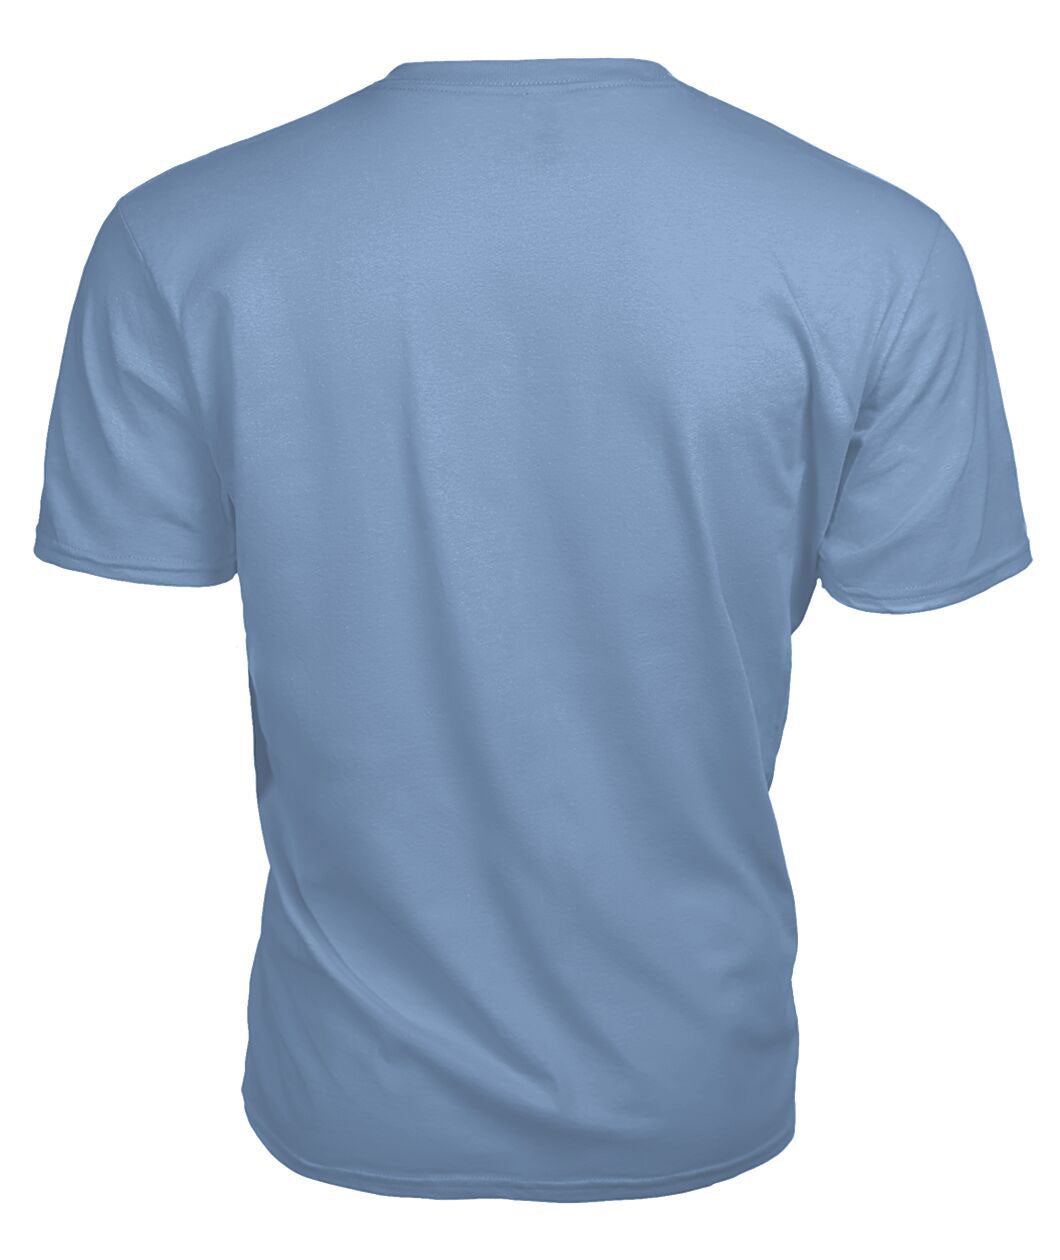 Udny Tartan Crest 2D T-shirt - Blood Runs Through My Veins Style